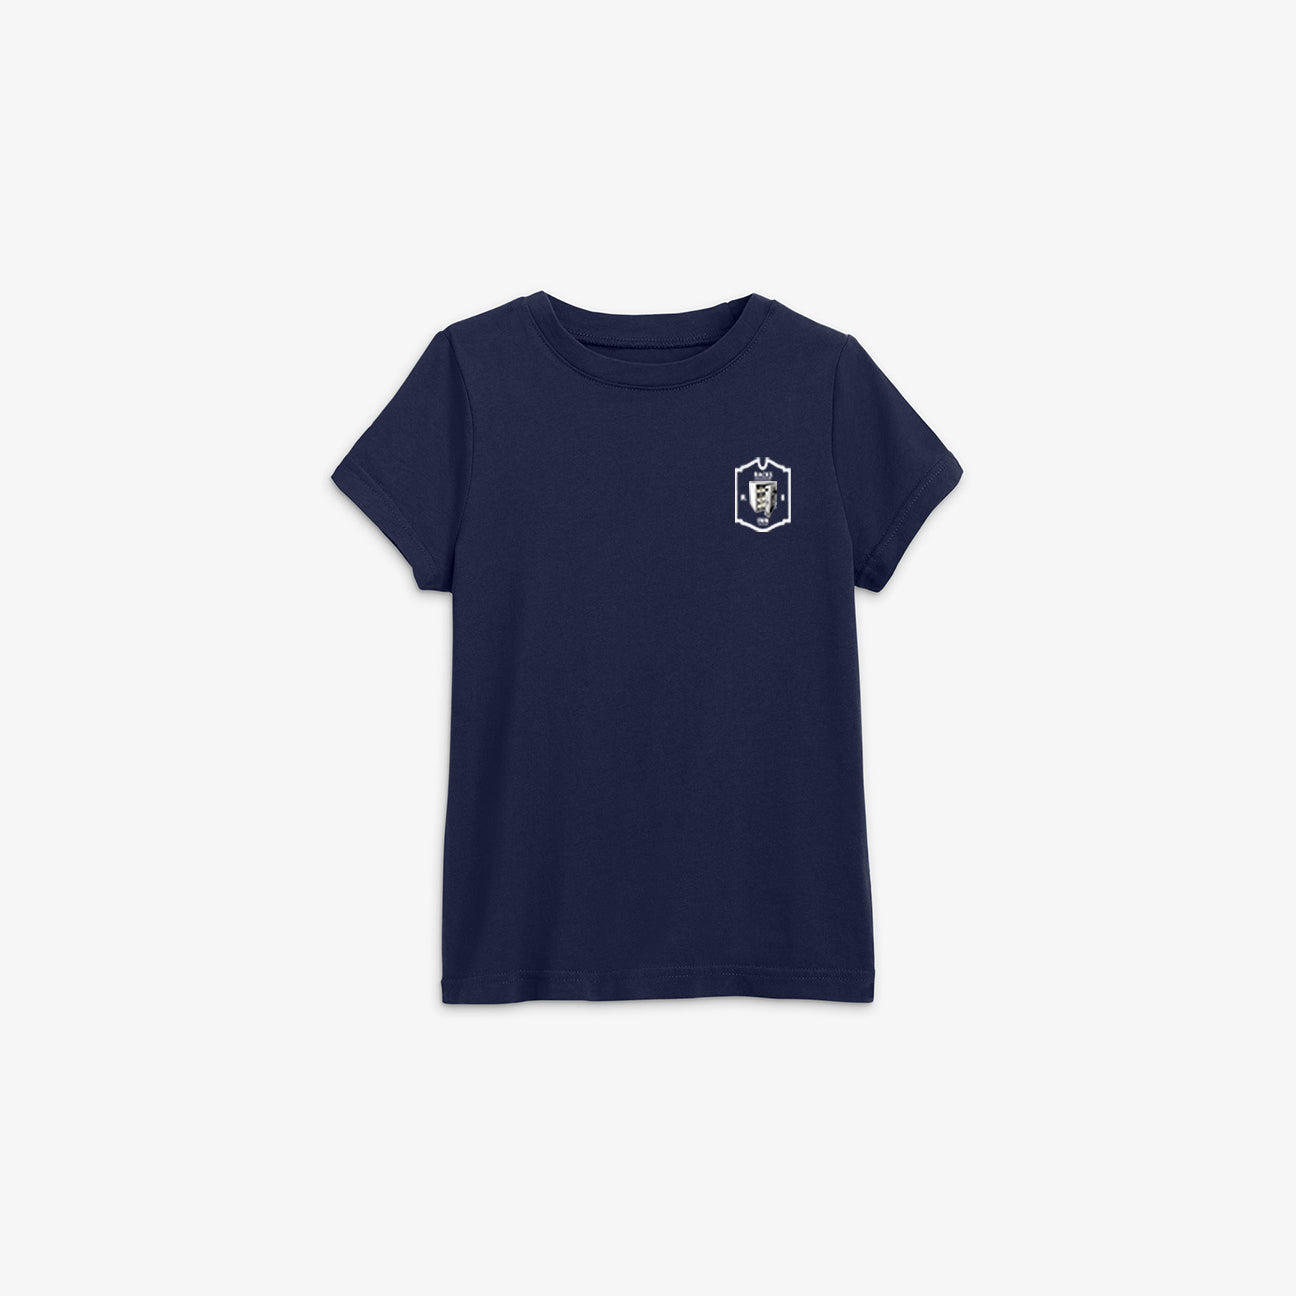 Mini Money Shirt - Navy